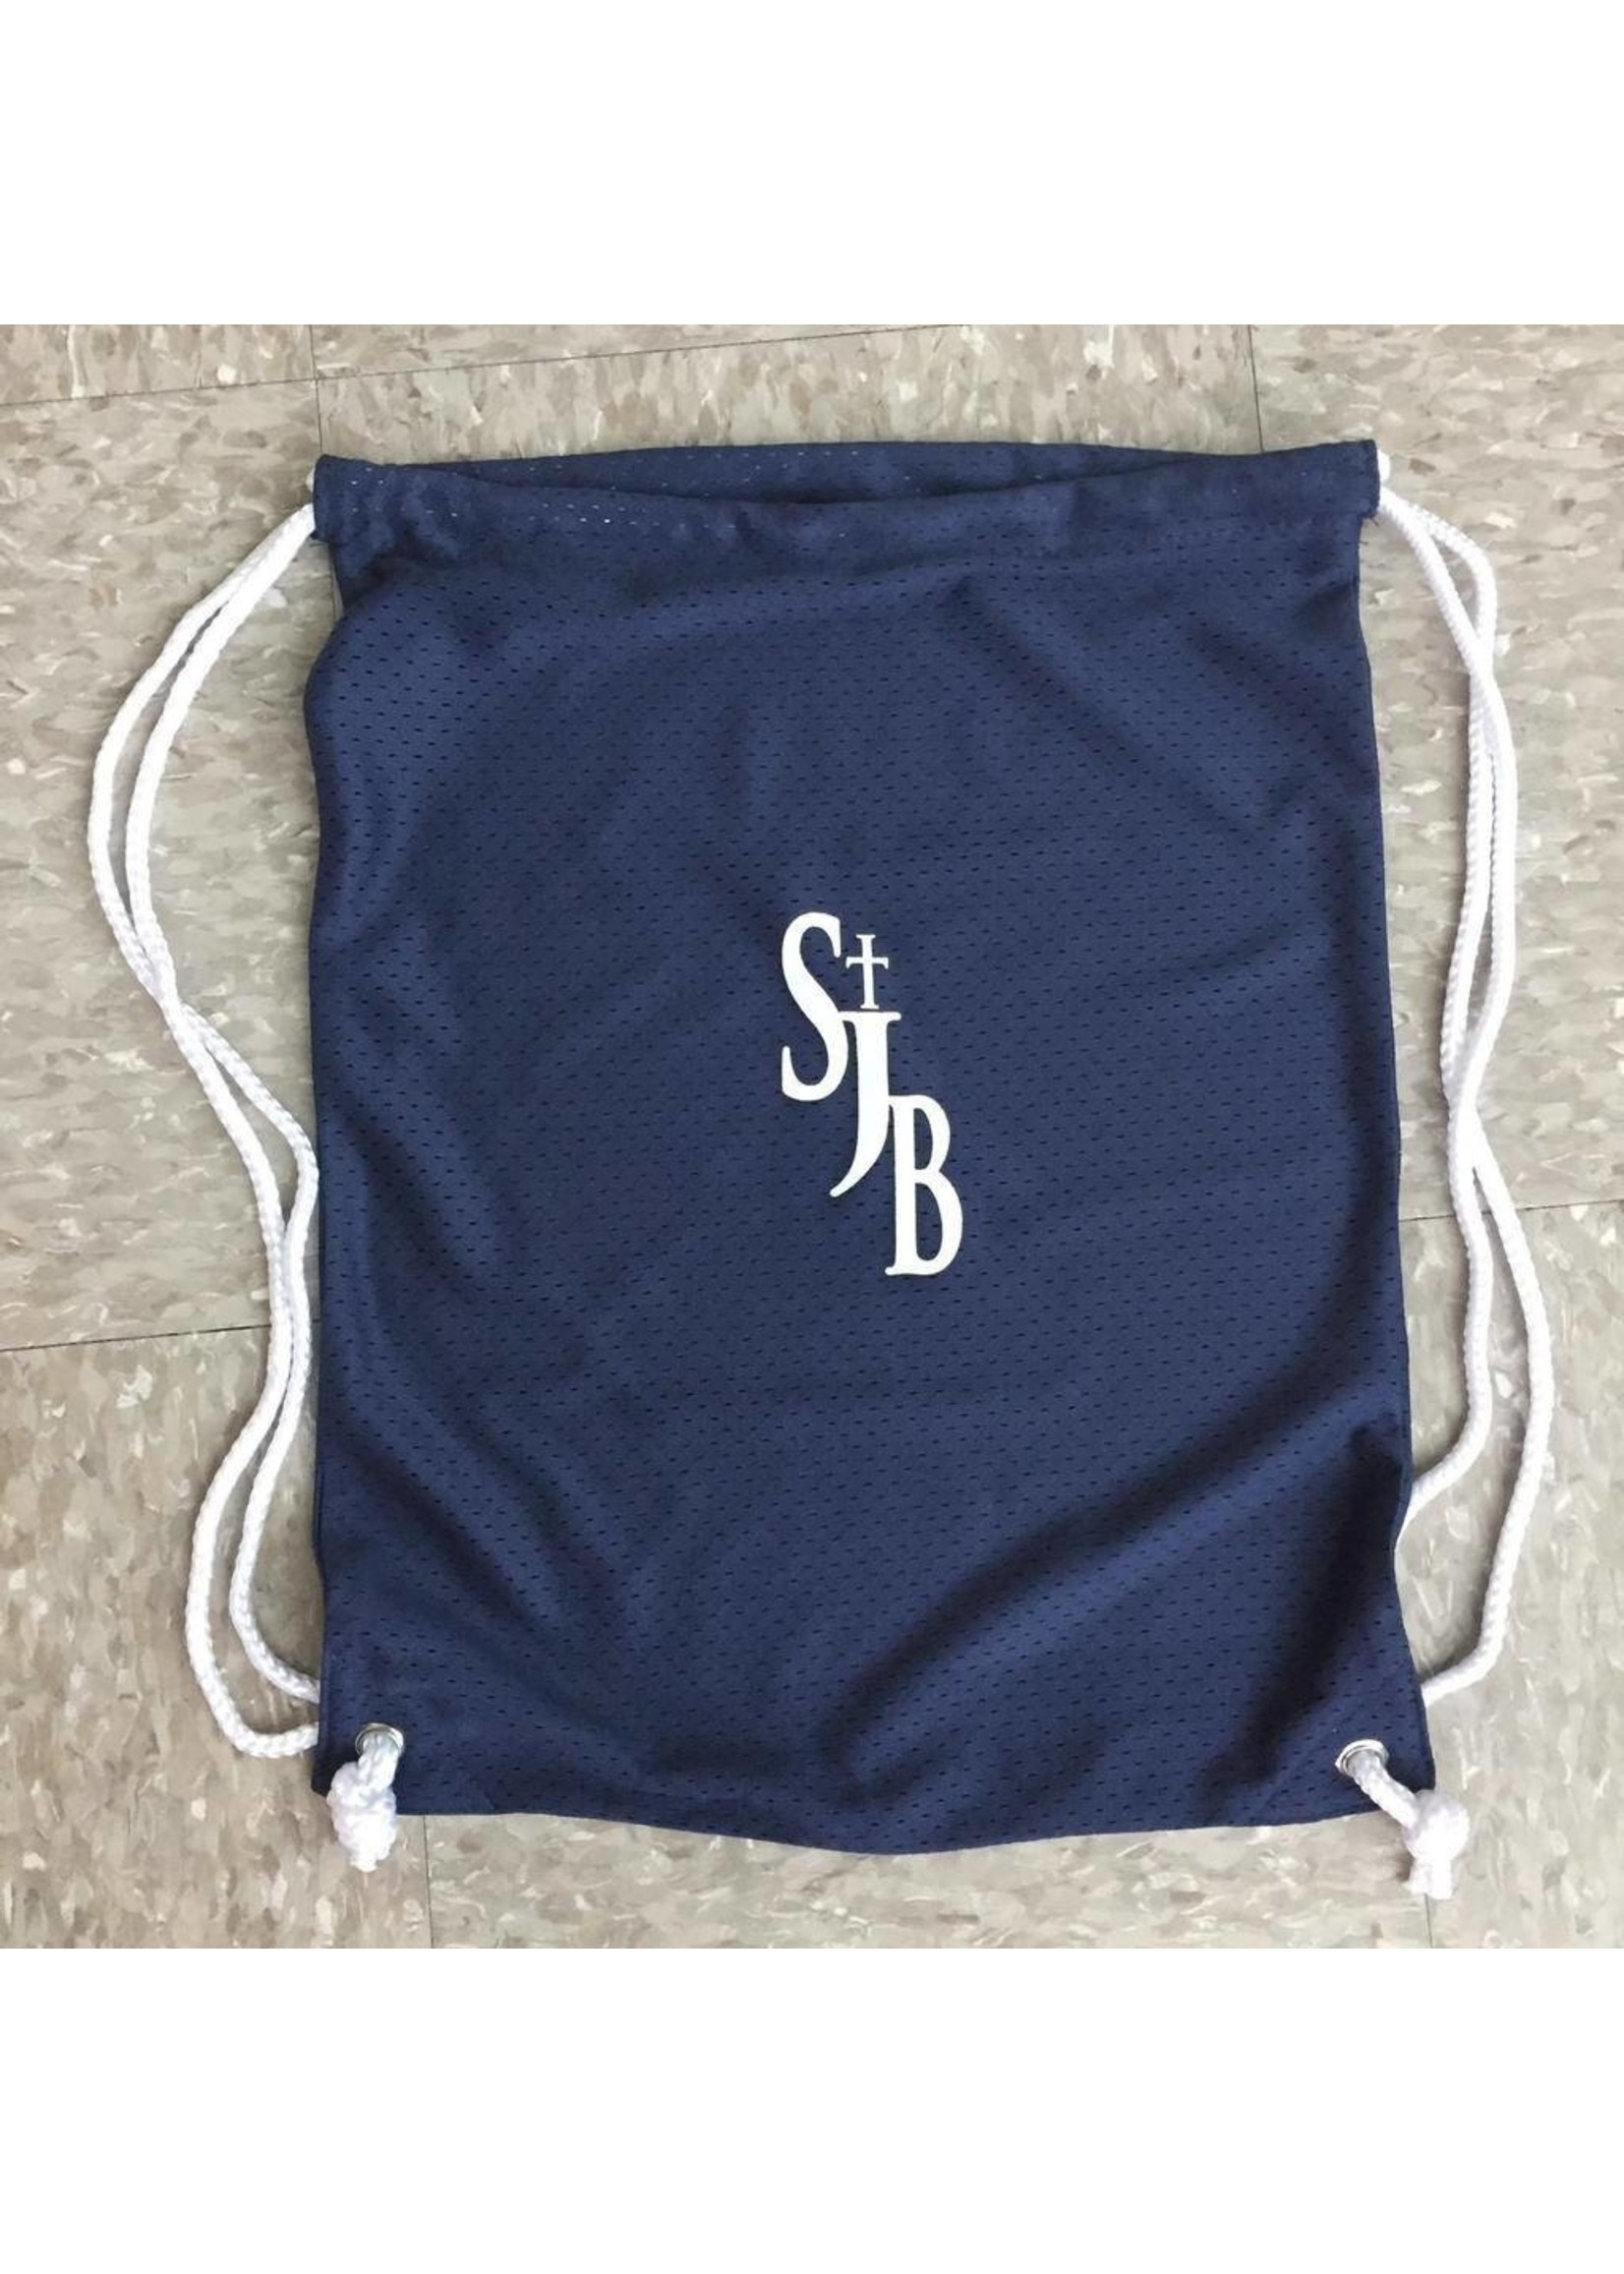 Bag - SJB Mesh Cinch bag, navy - Saint Paul's Place